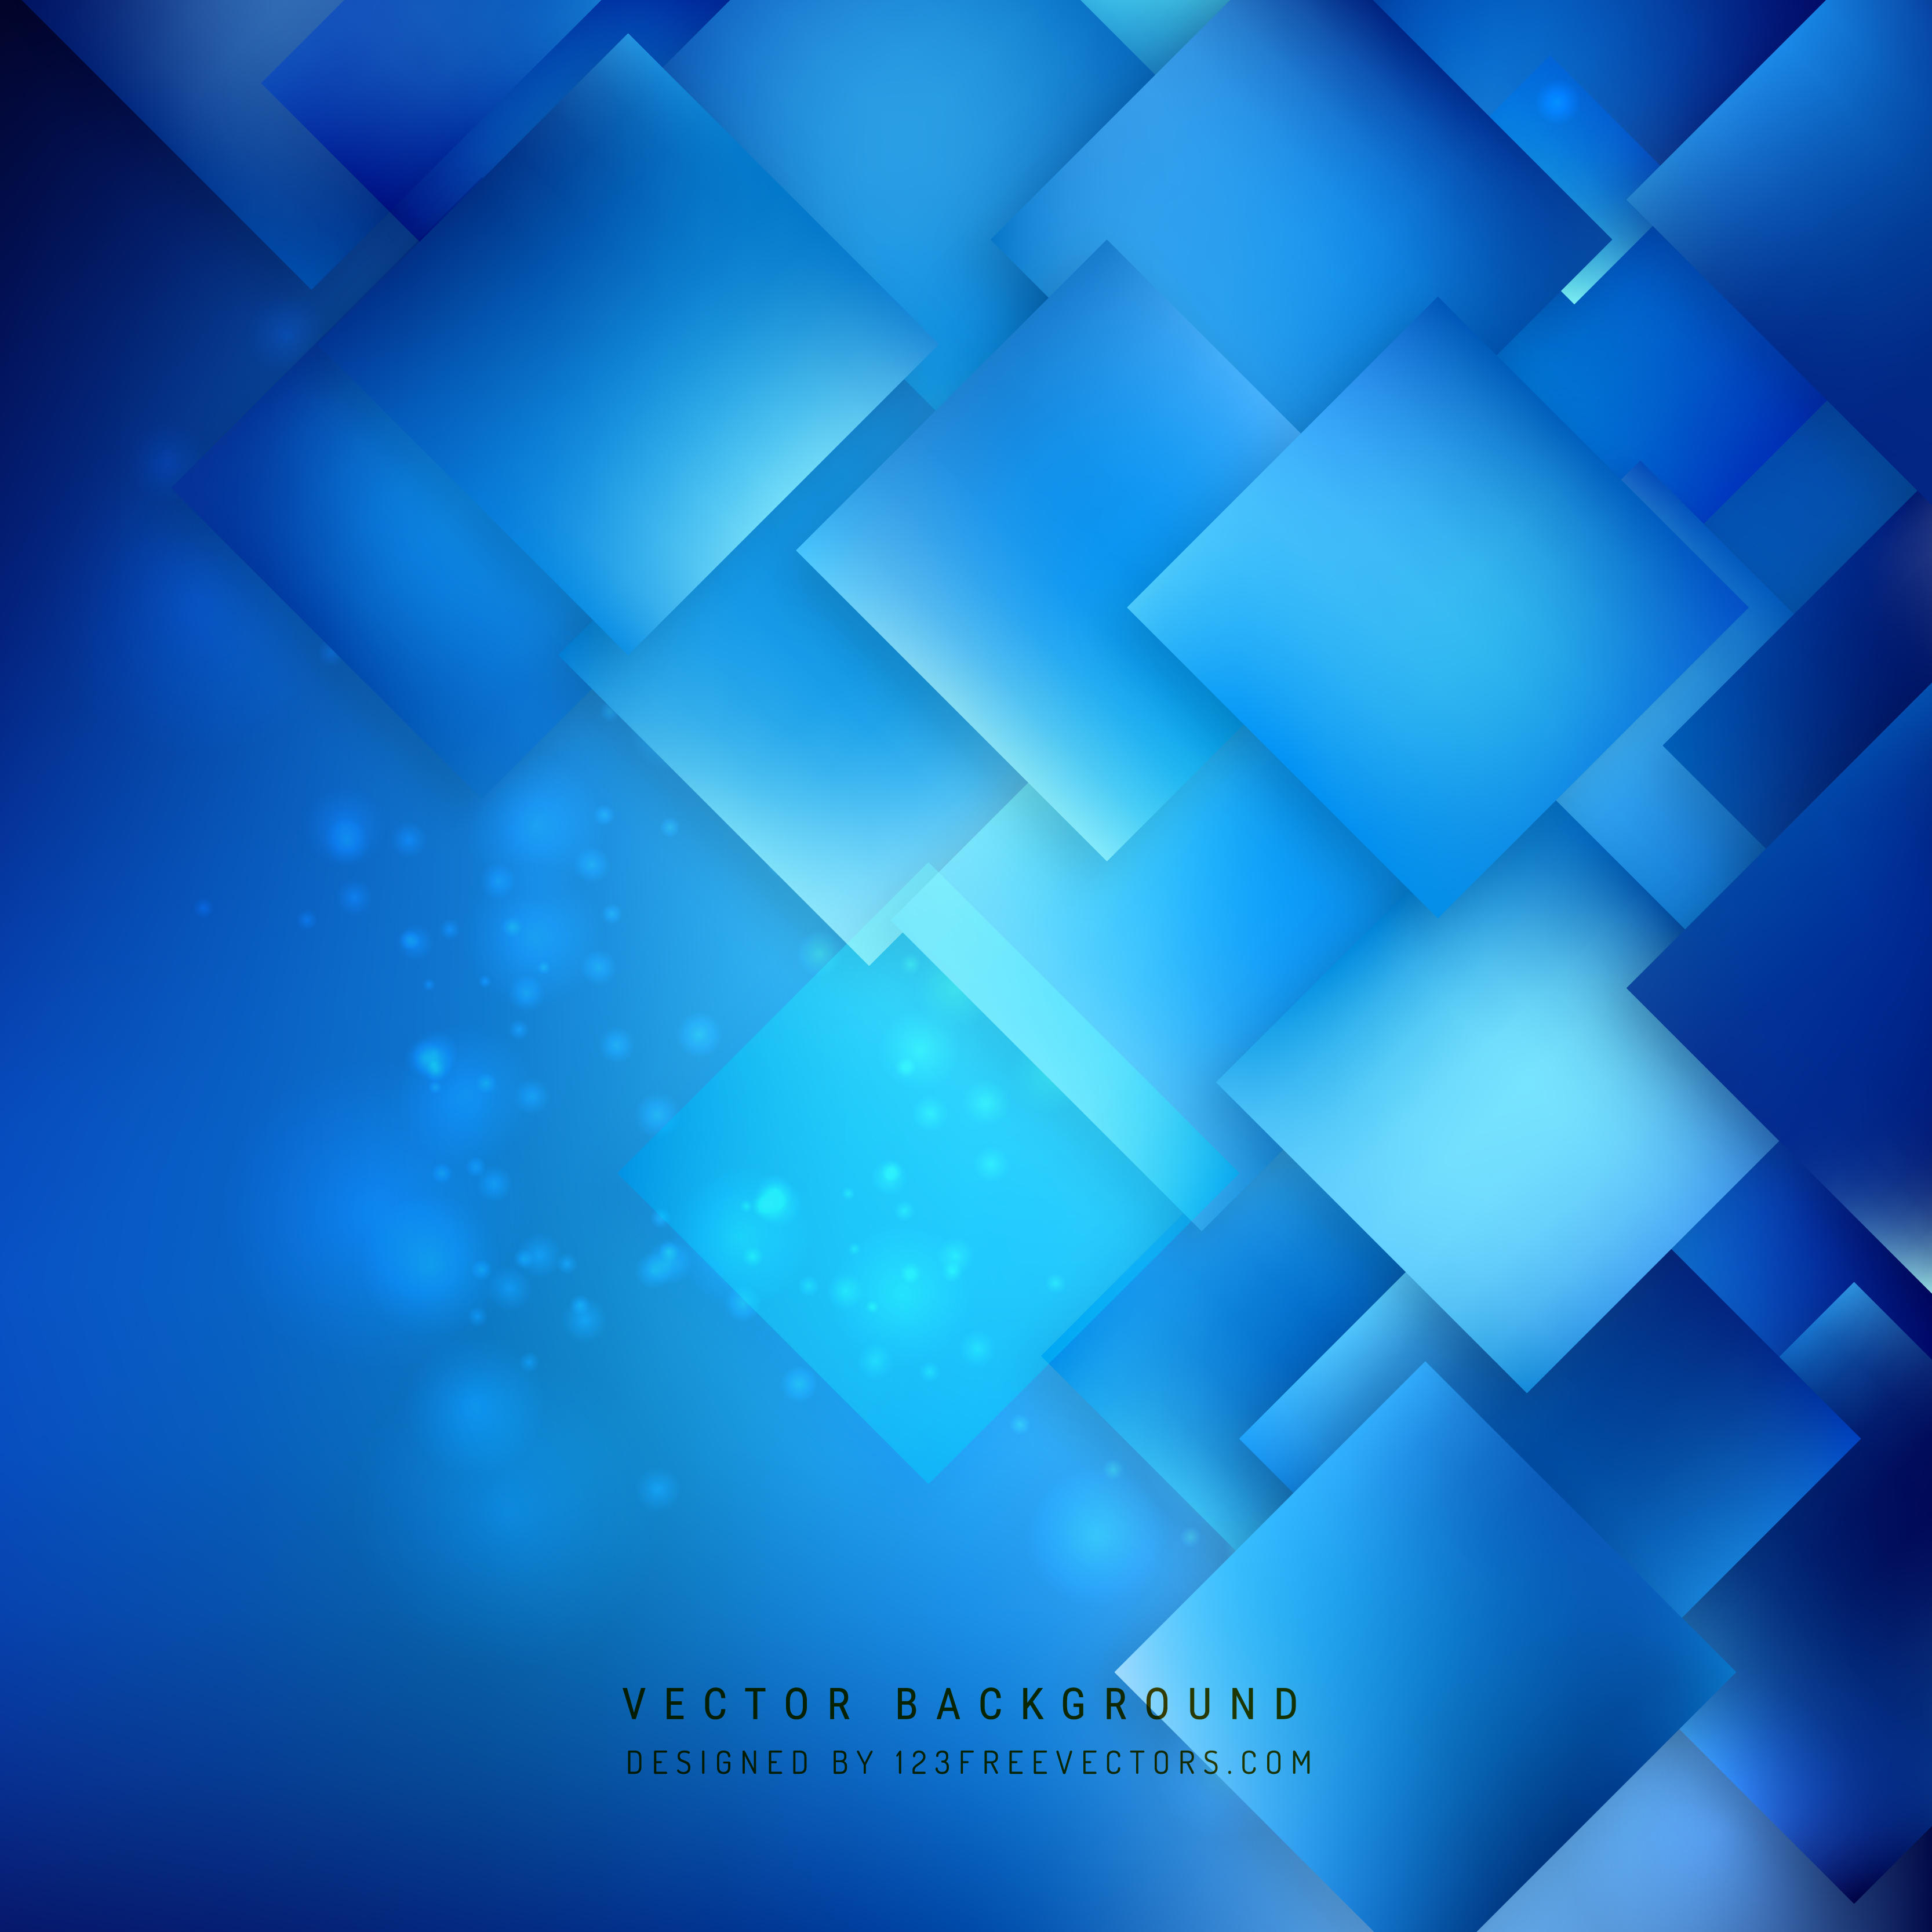 4630+ Blue Background Vectors | Download Free Vector Art & Graphics ...